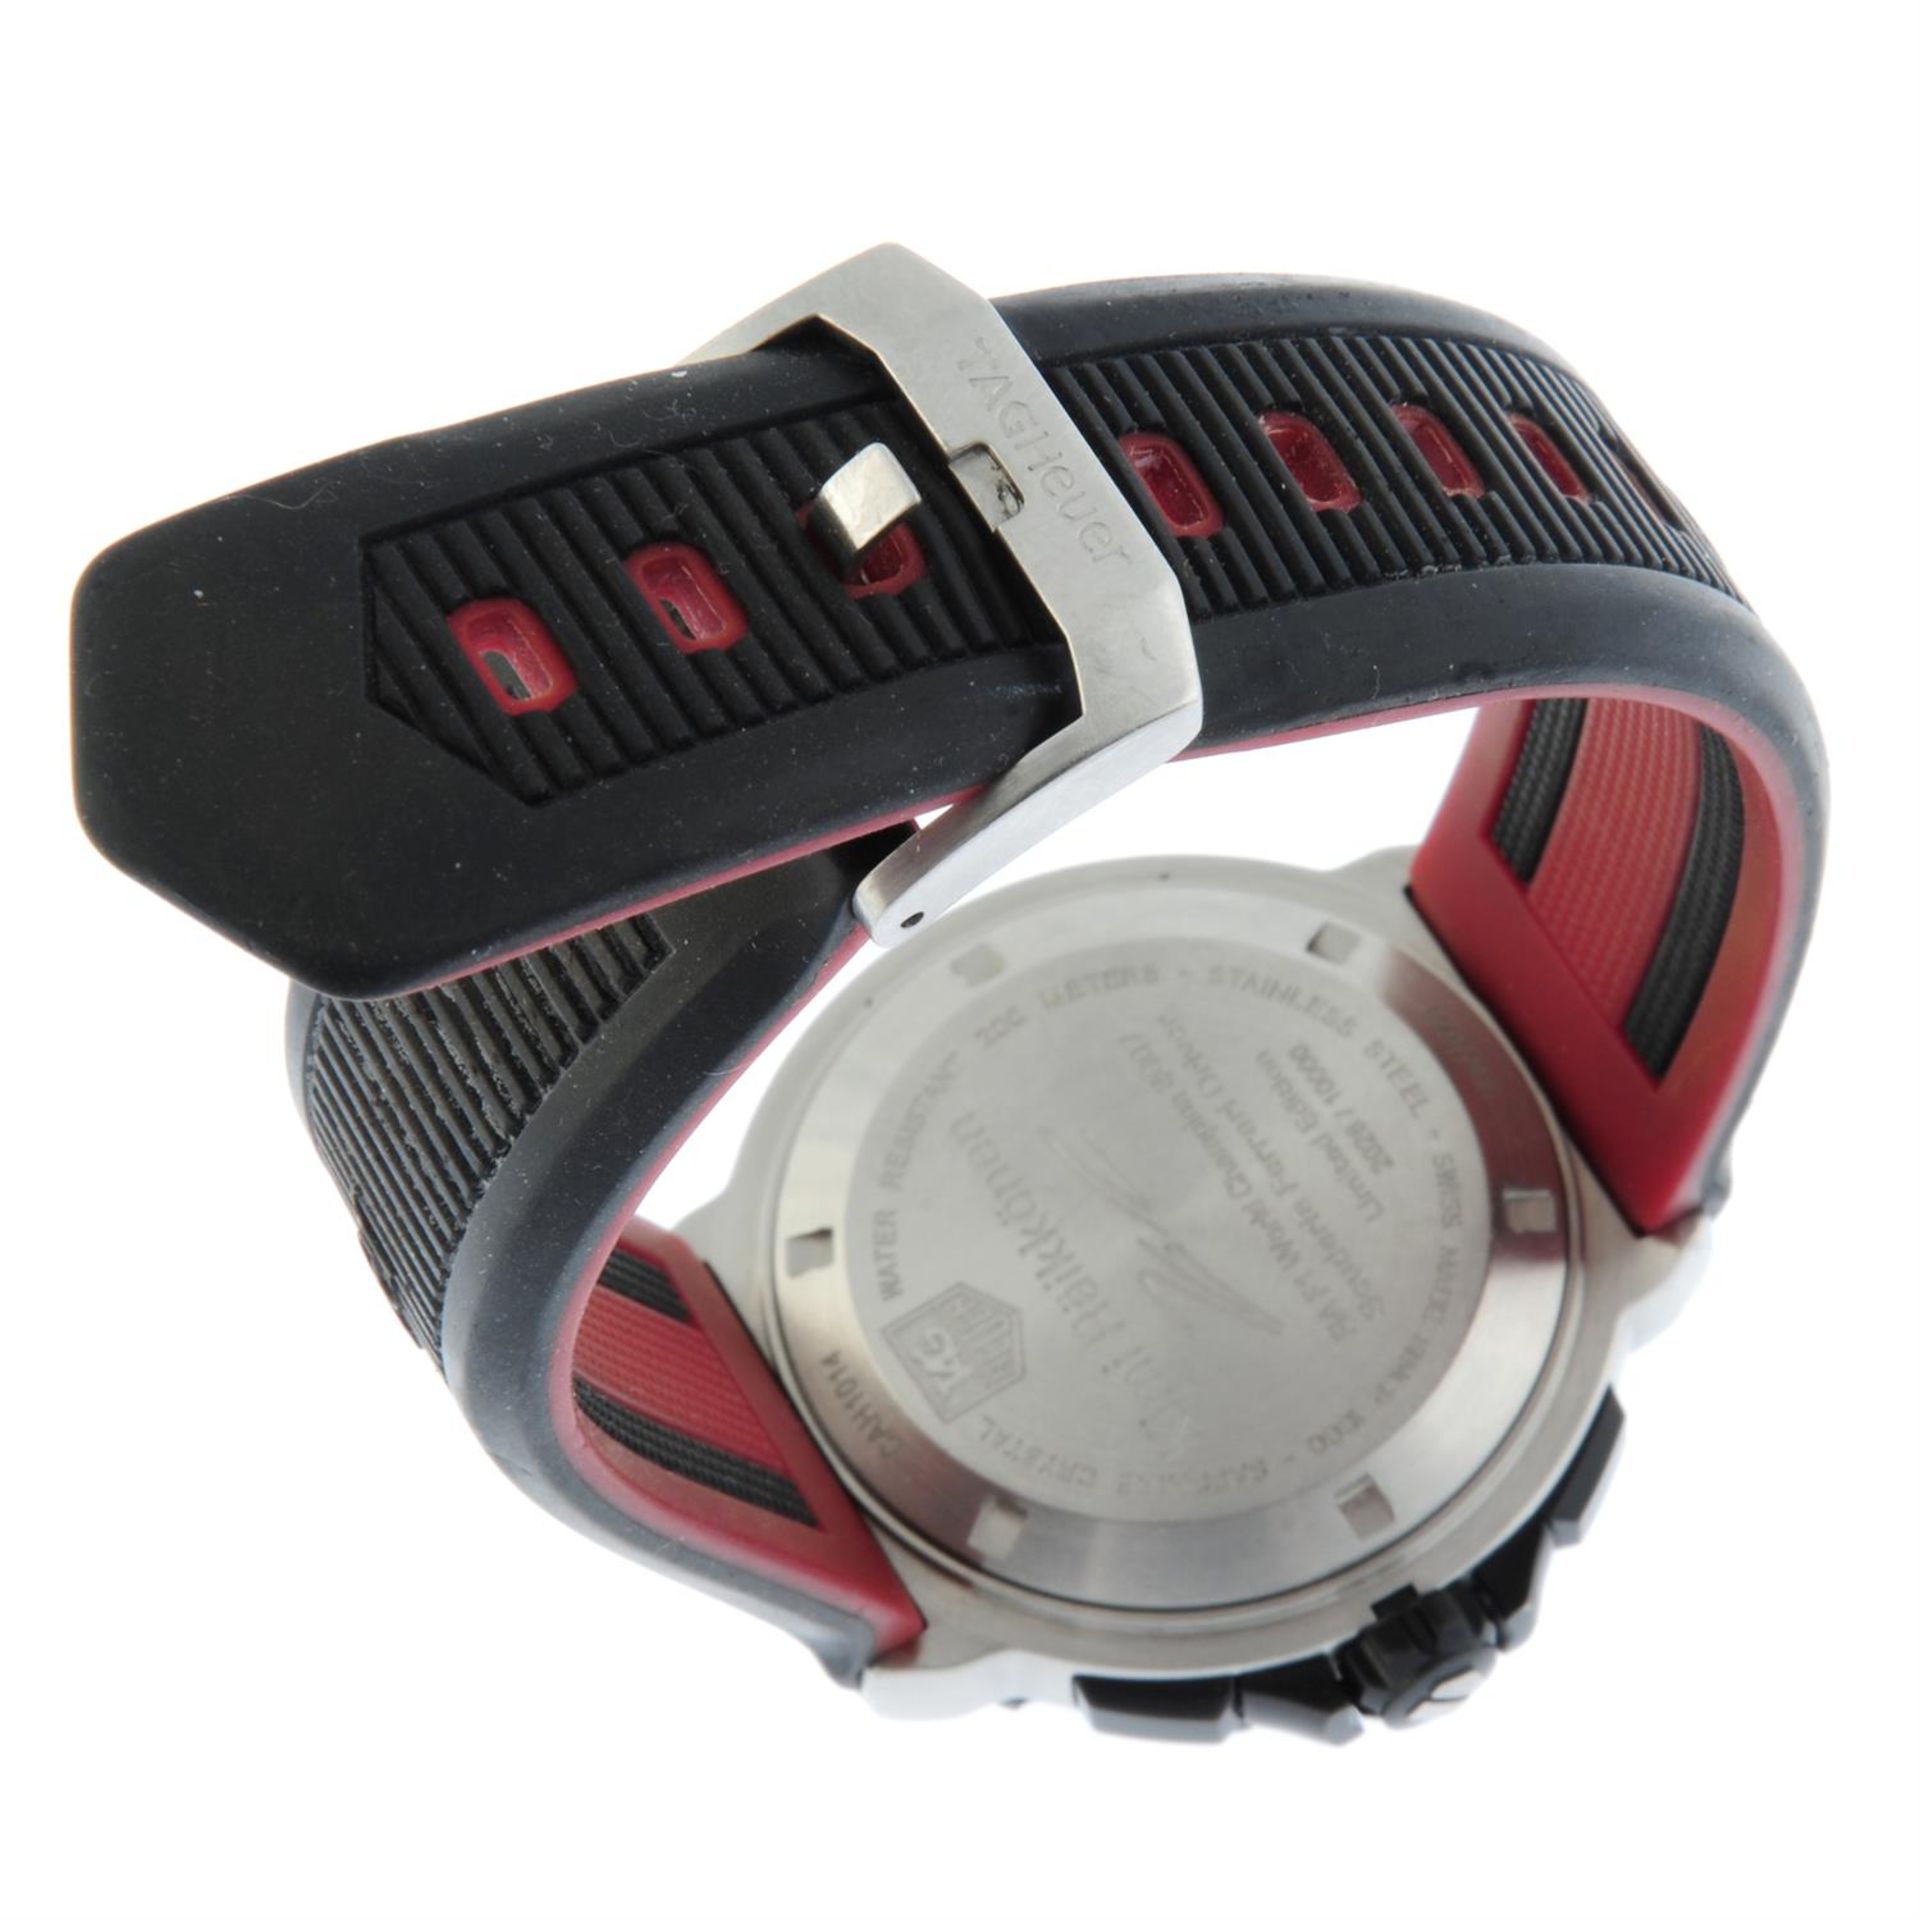 TAG Heuer - a Formula 1 Kimi Räikkönen chronograph watch, 45mm. - Image 2 of 6